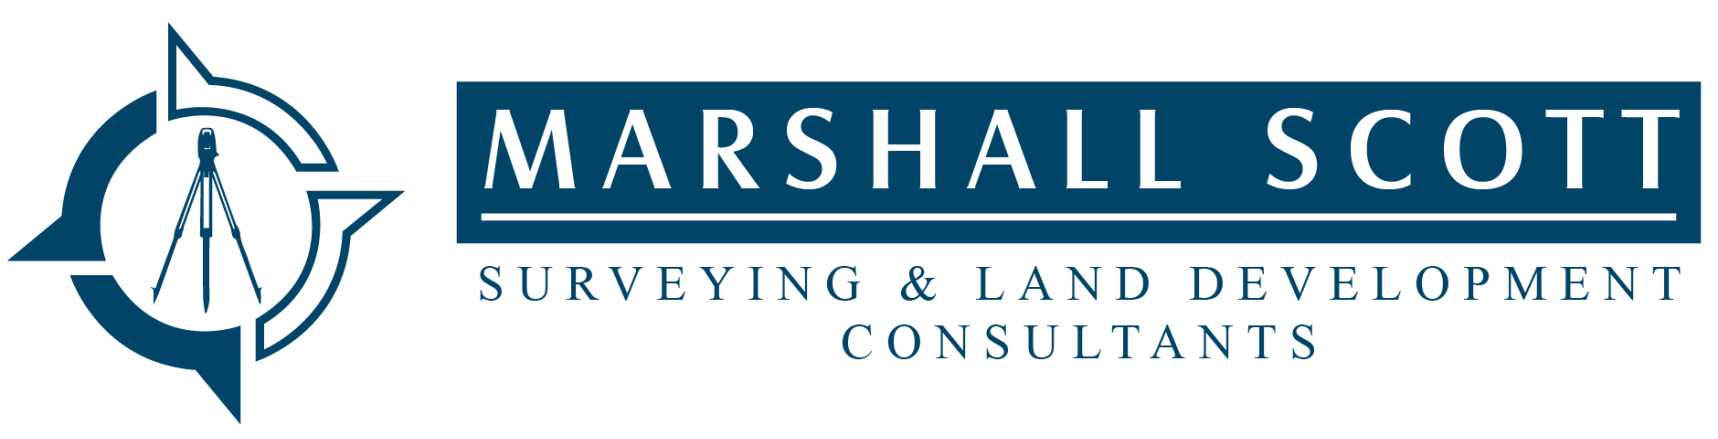 Marshall Scott Surveying & Land Development Consultants